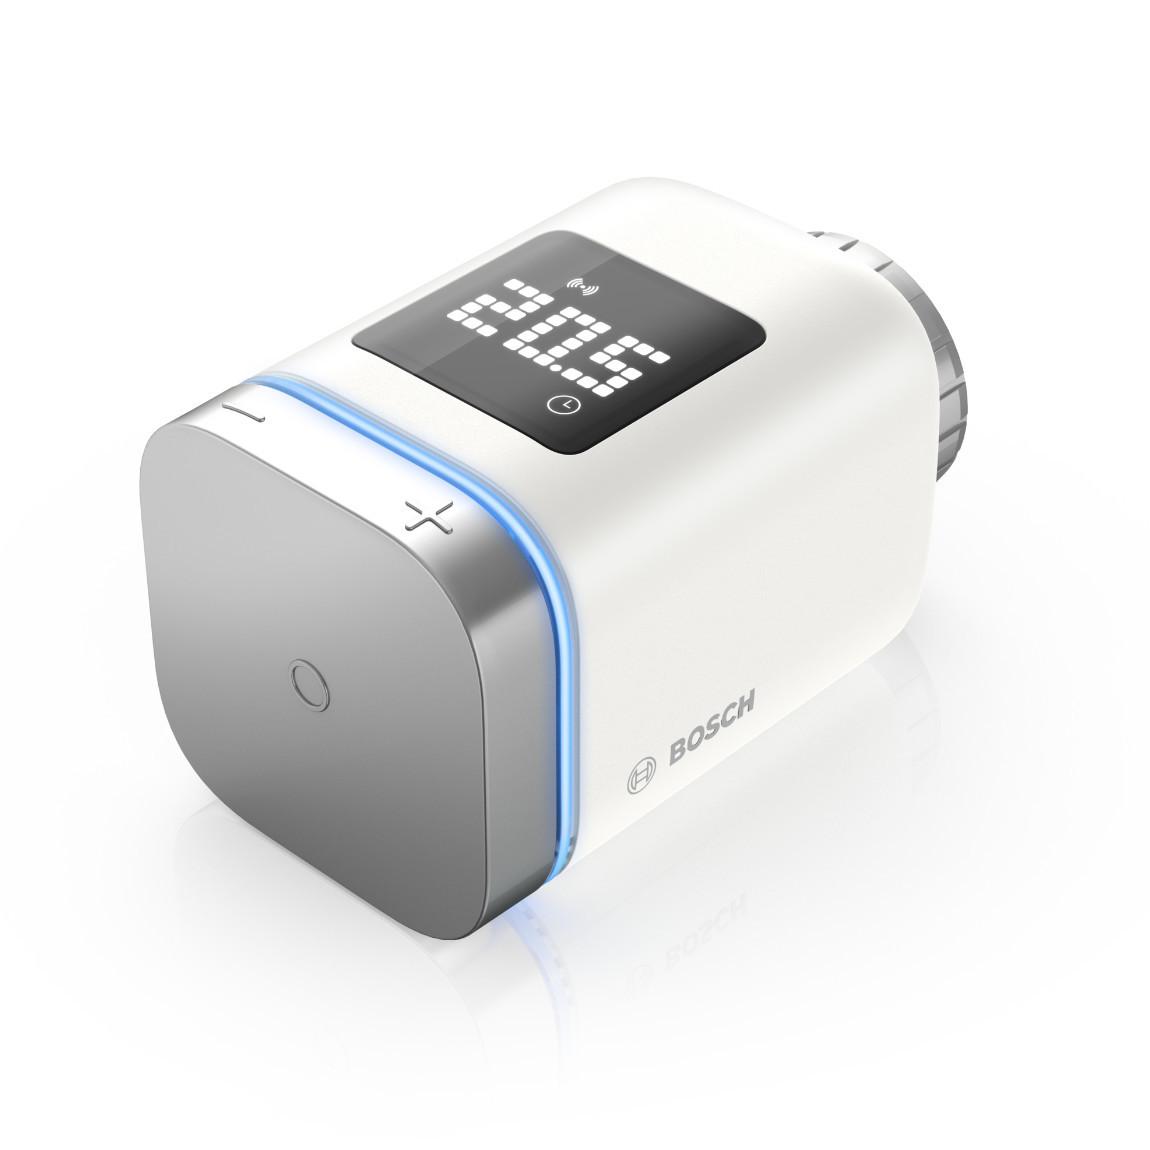 Bosch Smart Home Heizkörper-Thermostat II 2er-Set_schraeg_blaue LED